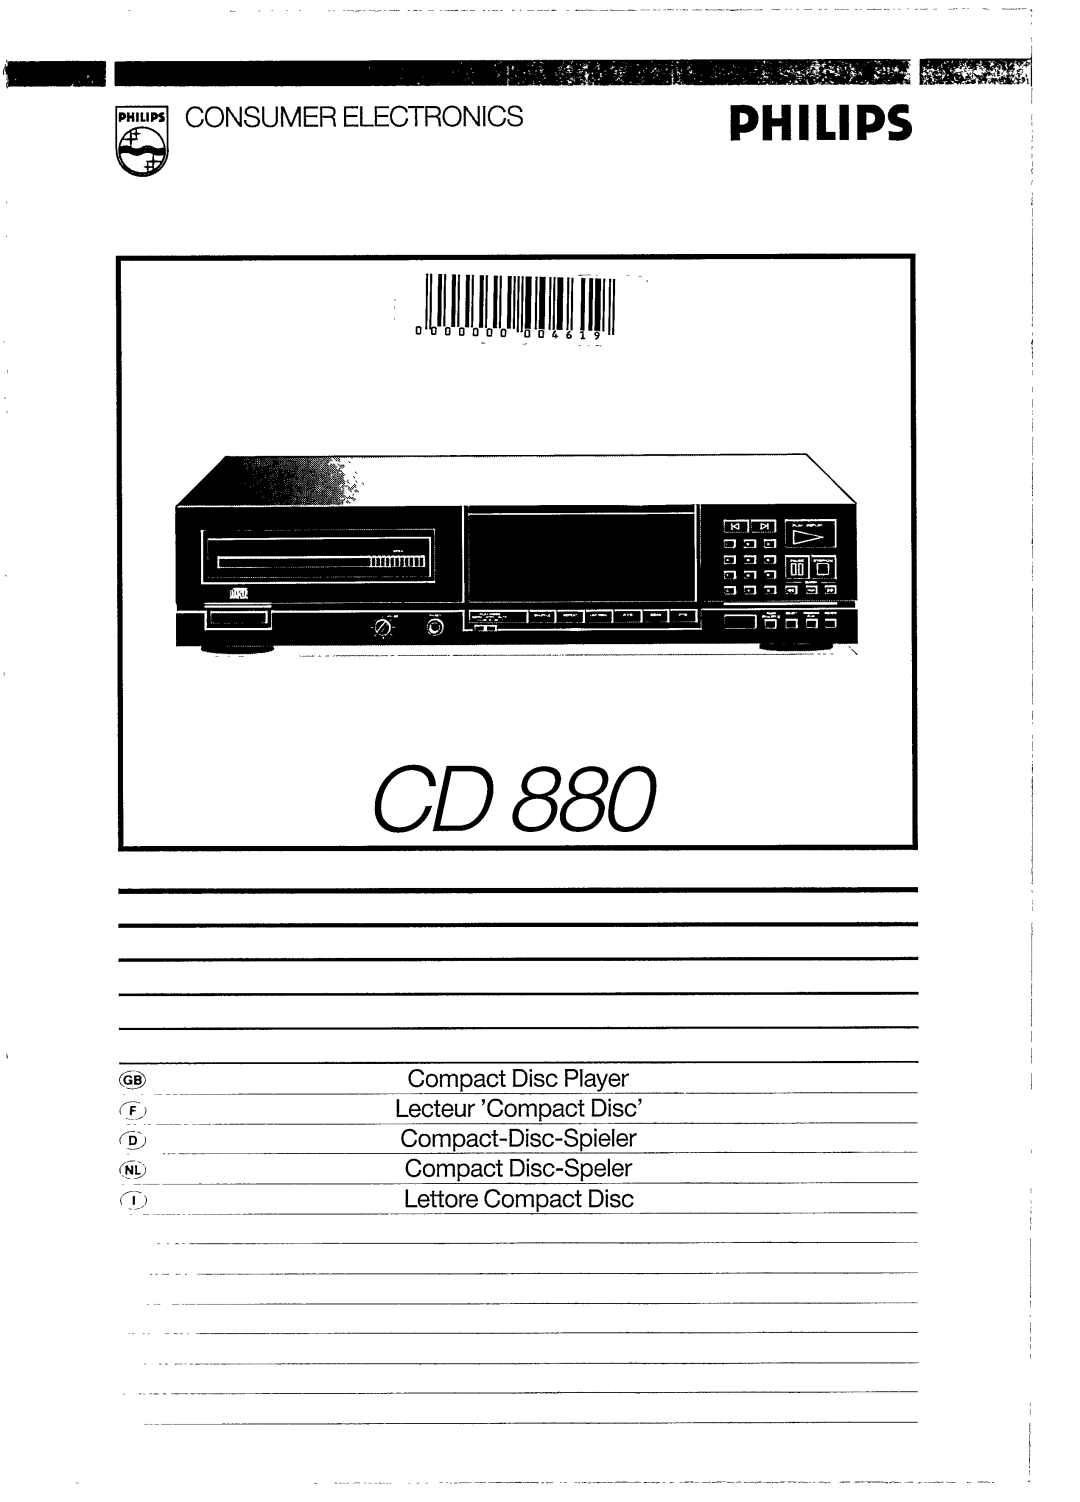 Philips CD 880 manual 